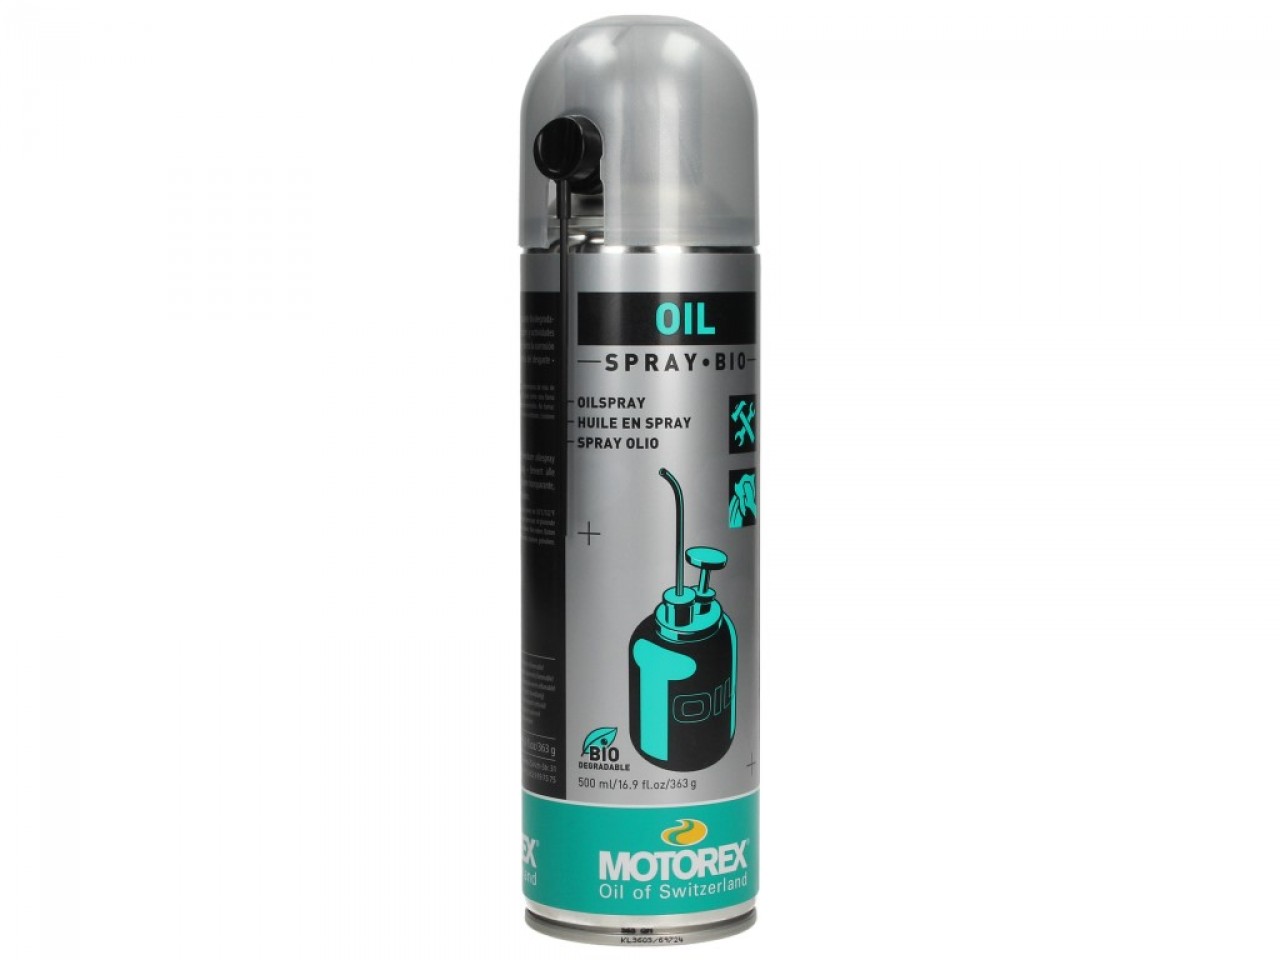 Motorex Spray Oil Spray Bio 500 ml